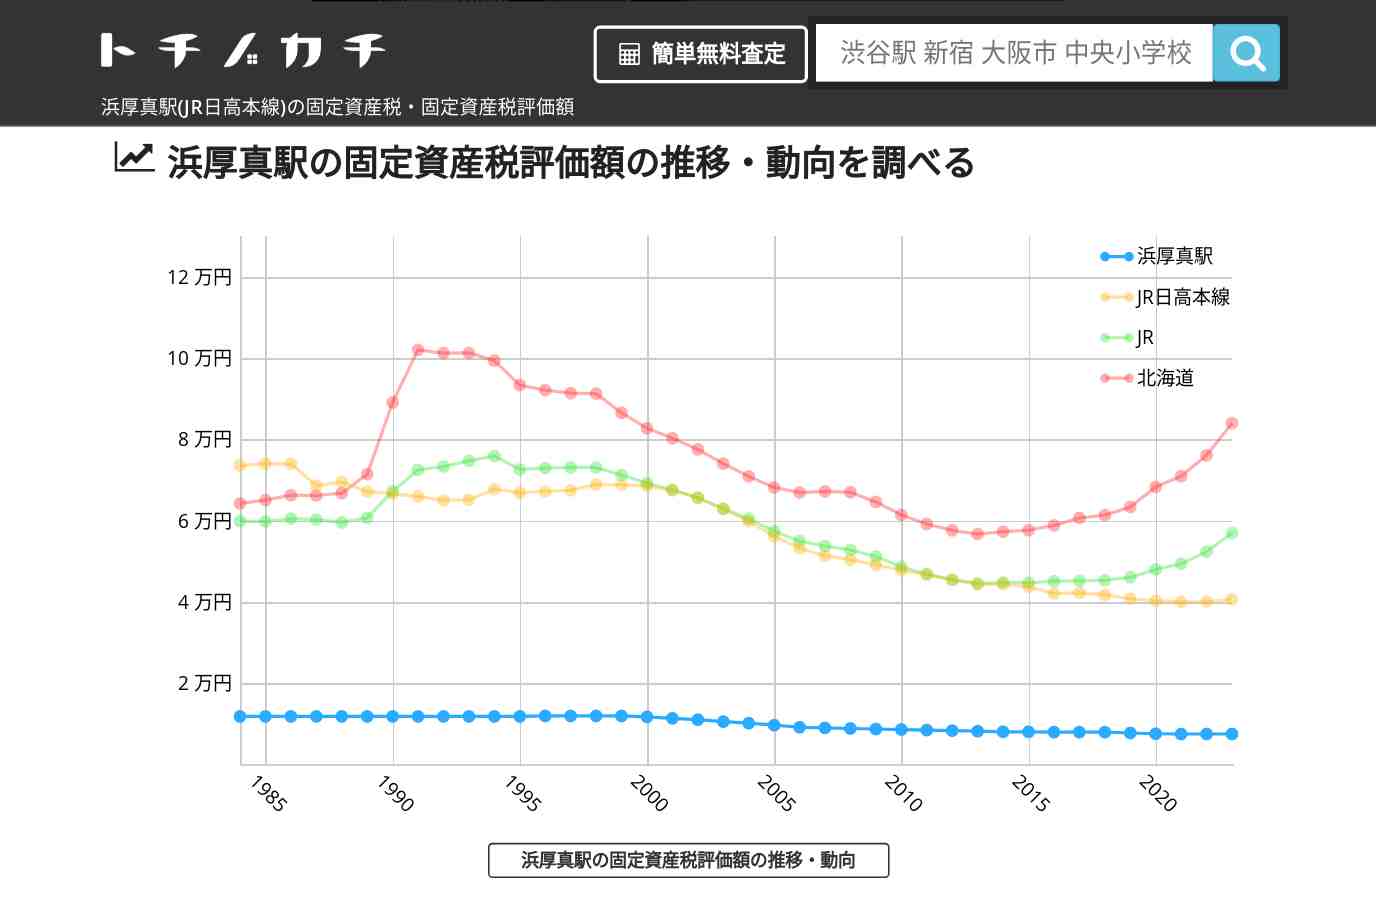 浜厚真駅(JR日高本線)の固定資産税・固定資産税評価額 | トチノカチ